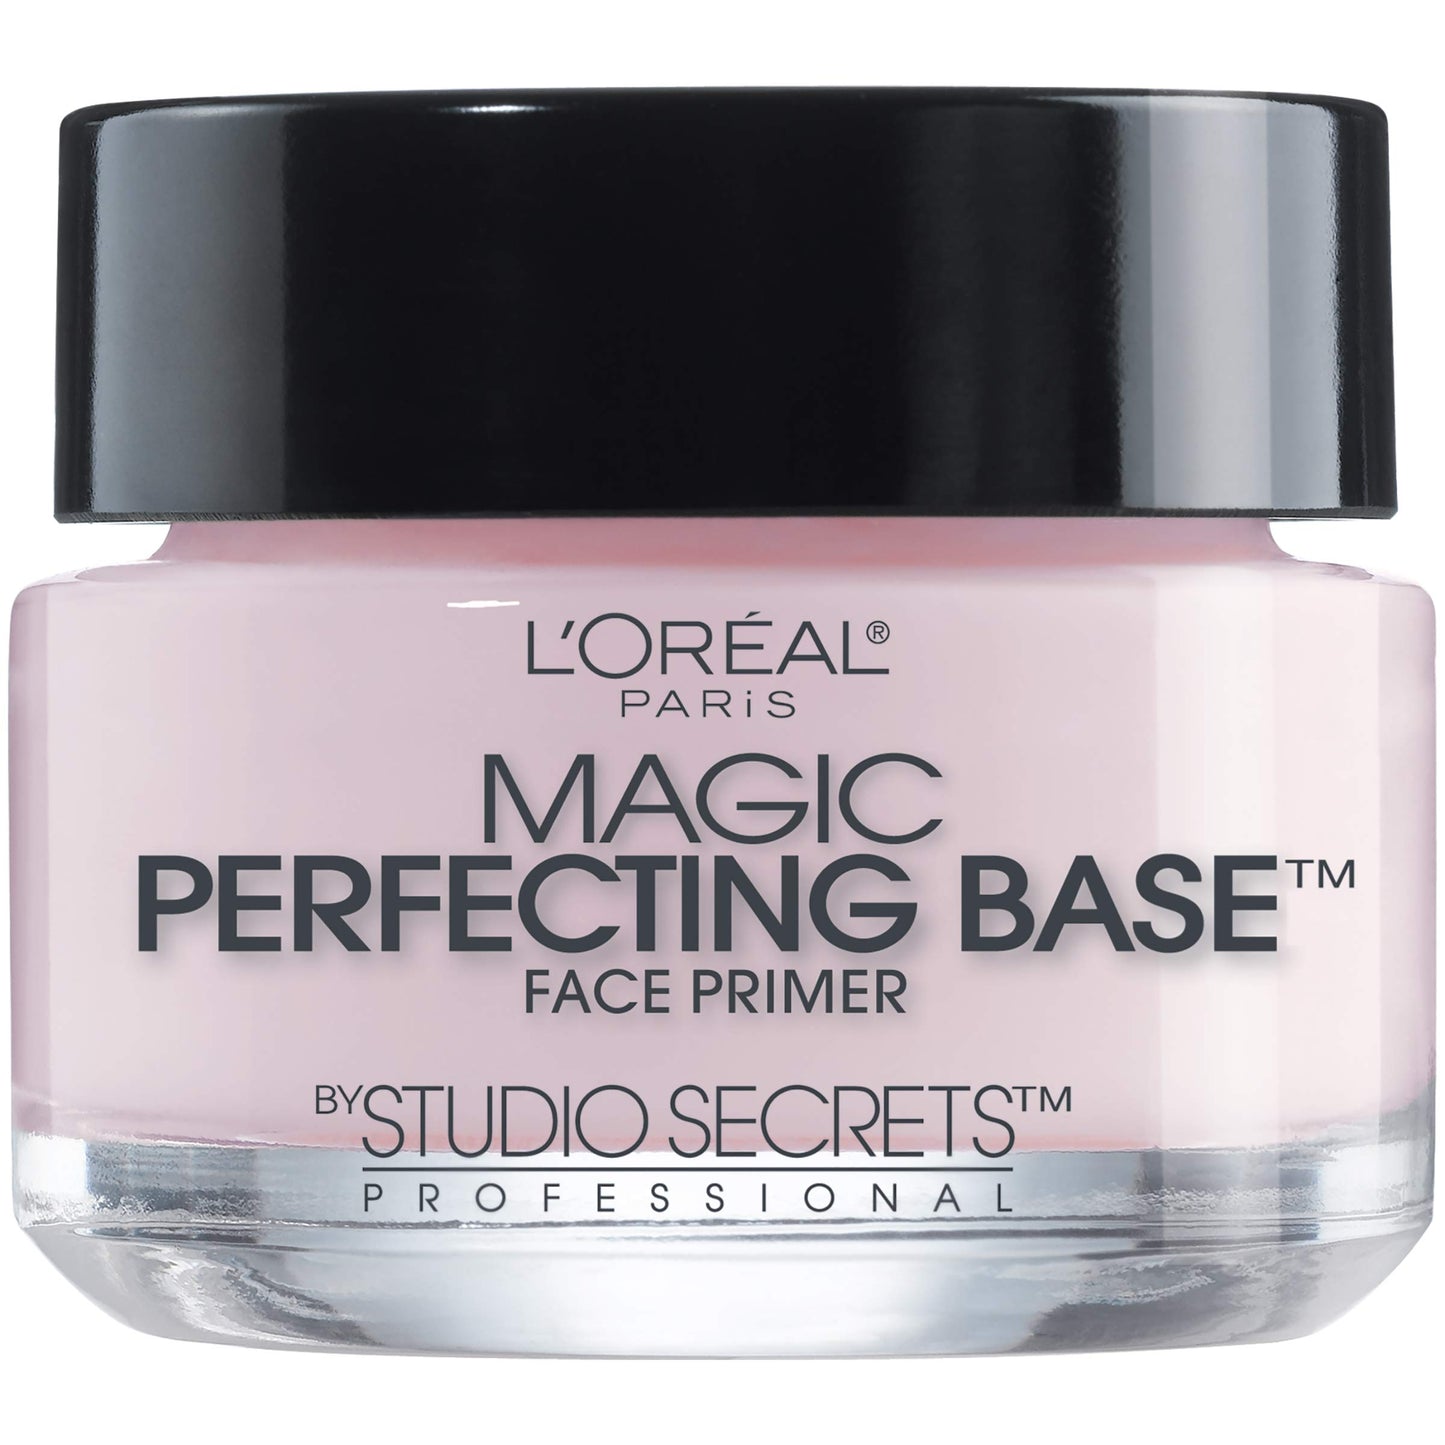 L'Oreal Paris Magic Perfecting Base Face Primer by Studio Secrets Professional 0.50 oz (Pack of 3)